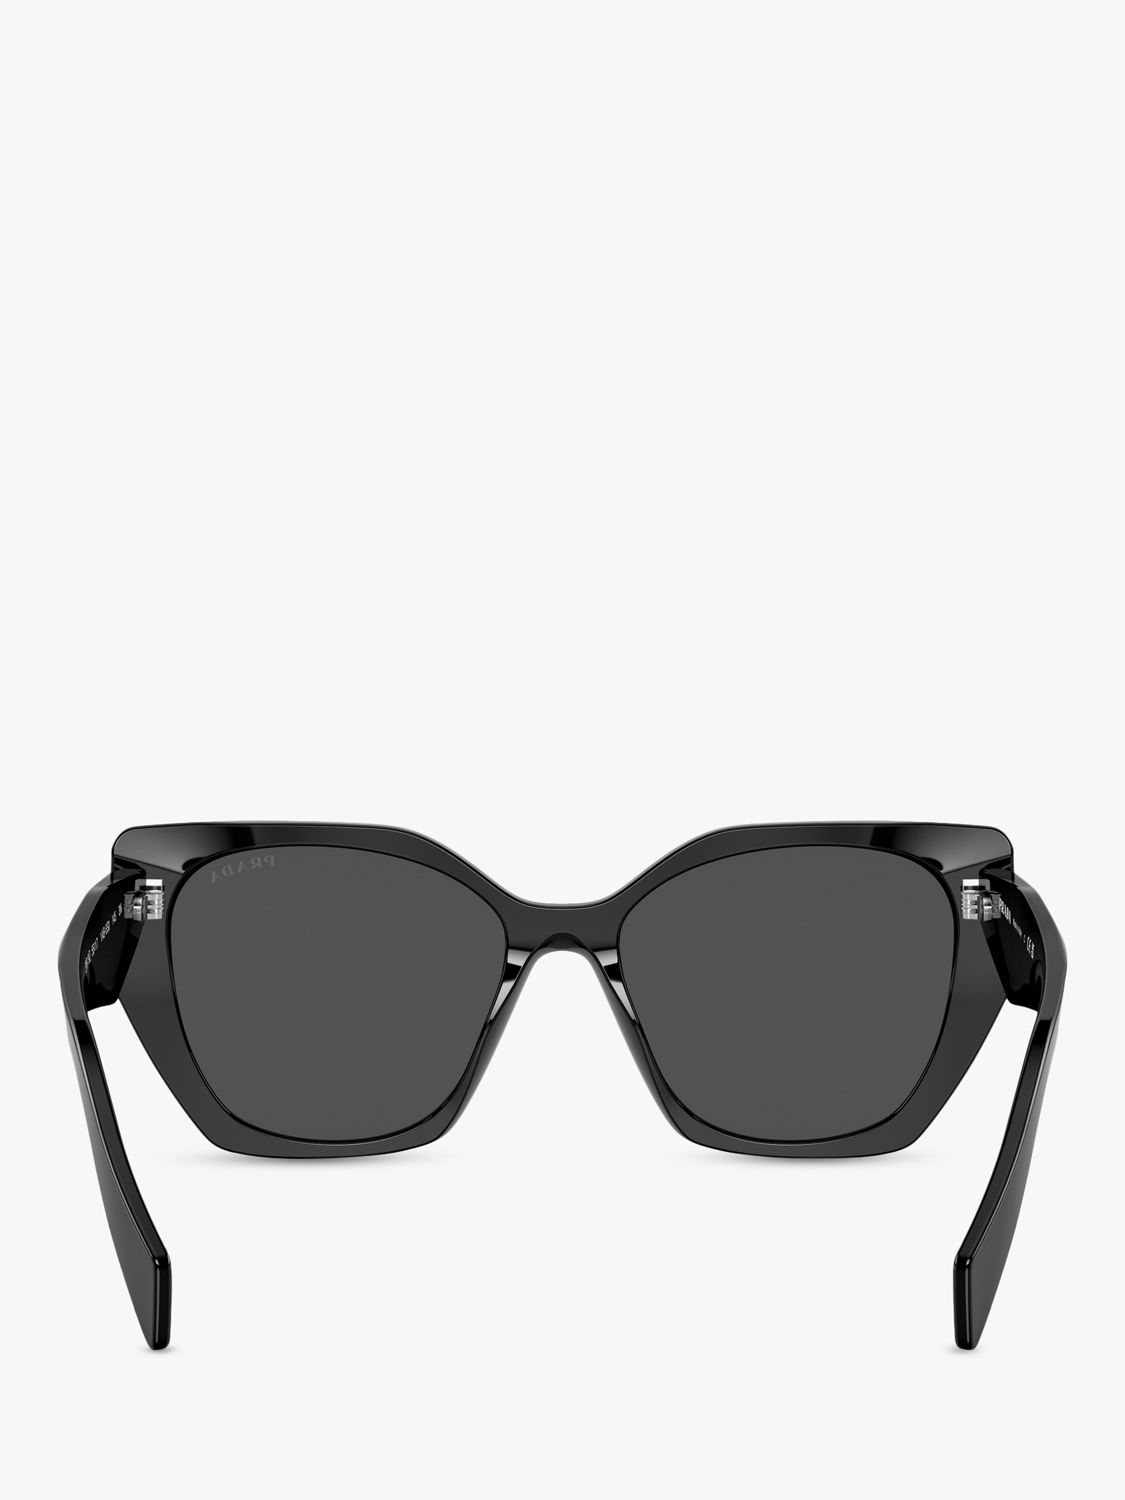 Prada PR 19ZS Women's Pillow Sunglasses, Black